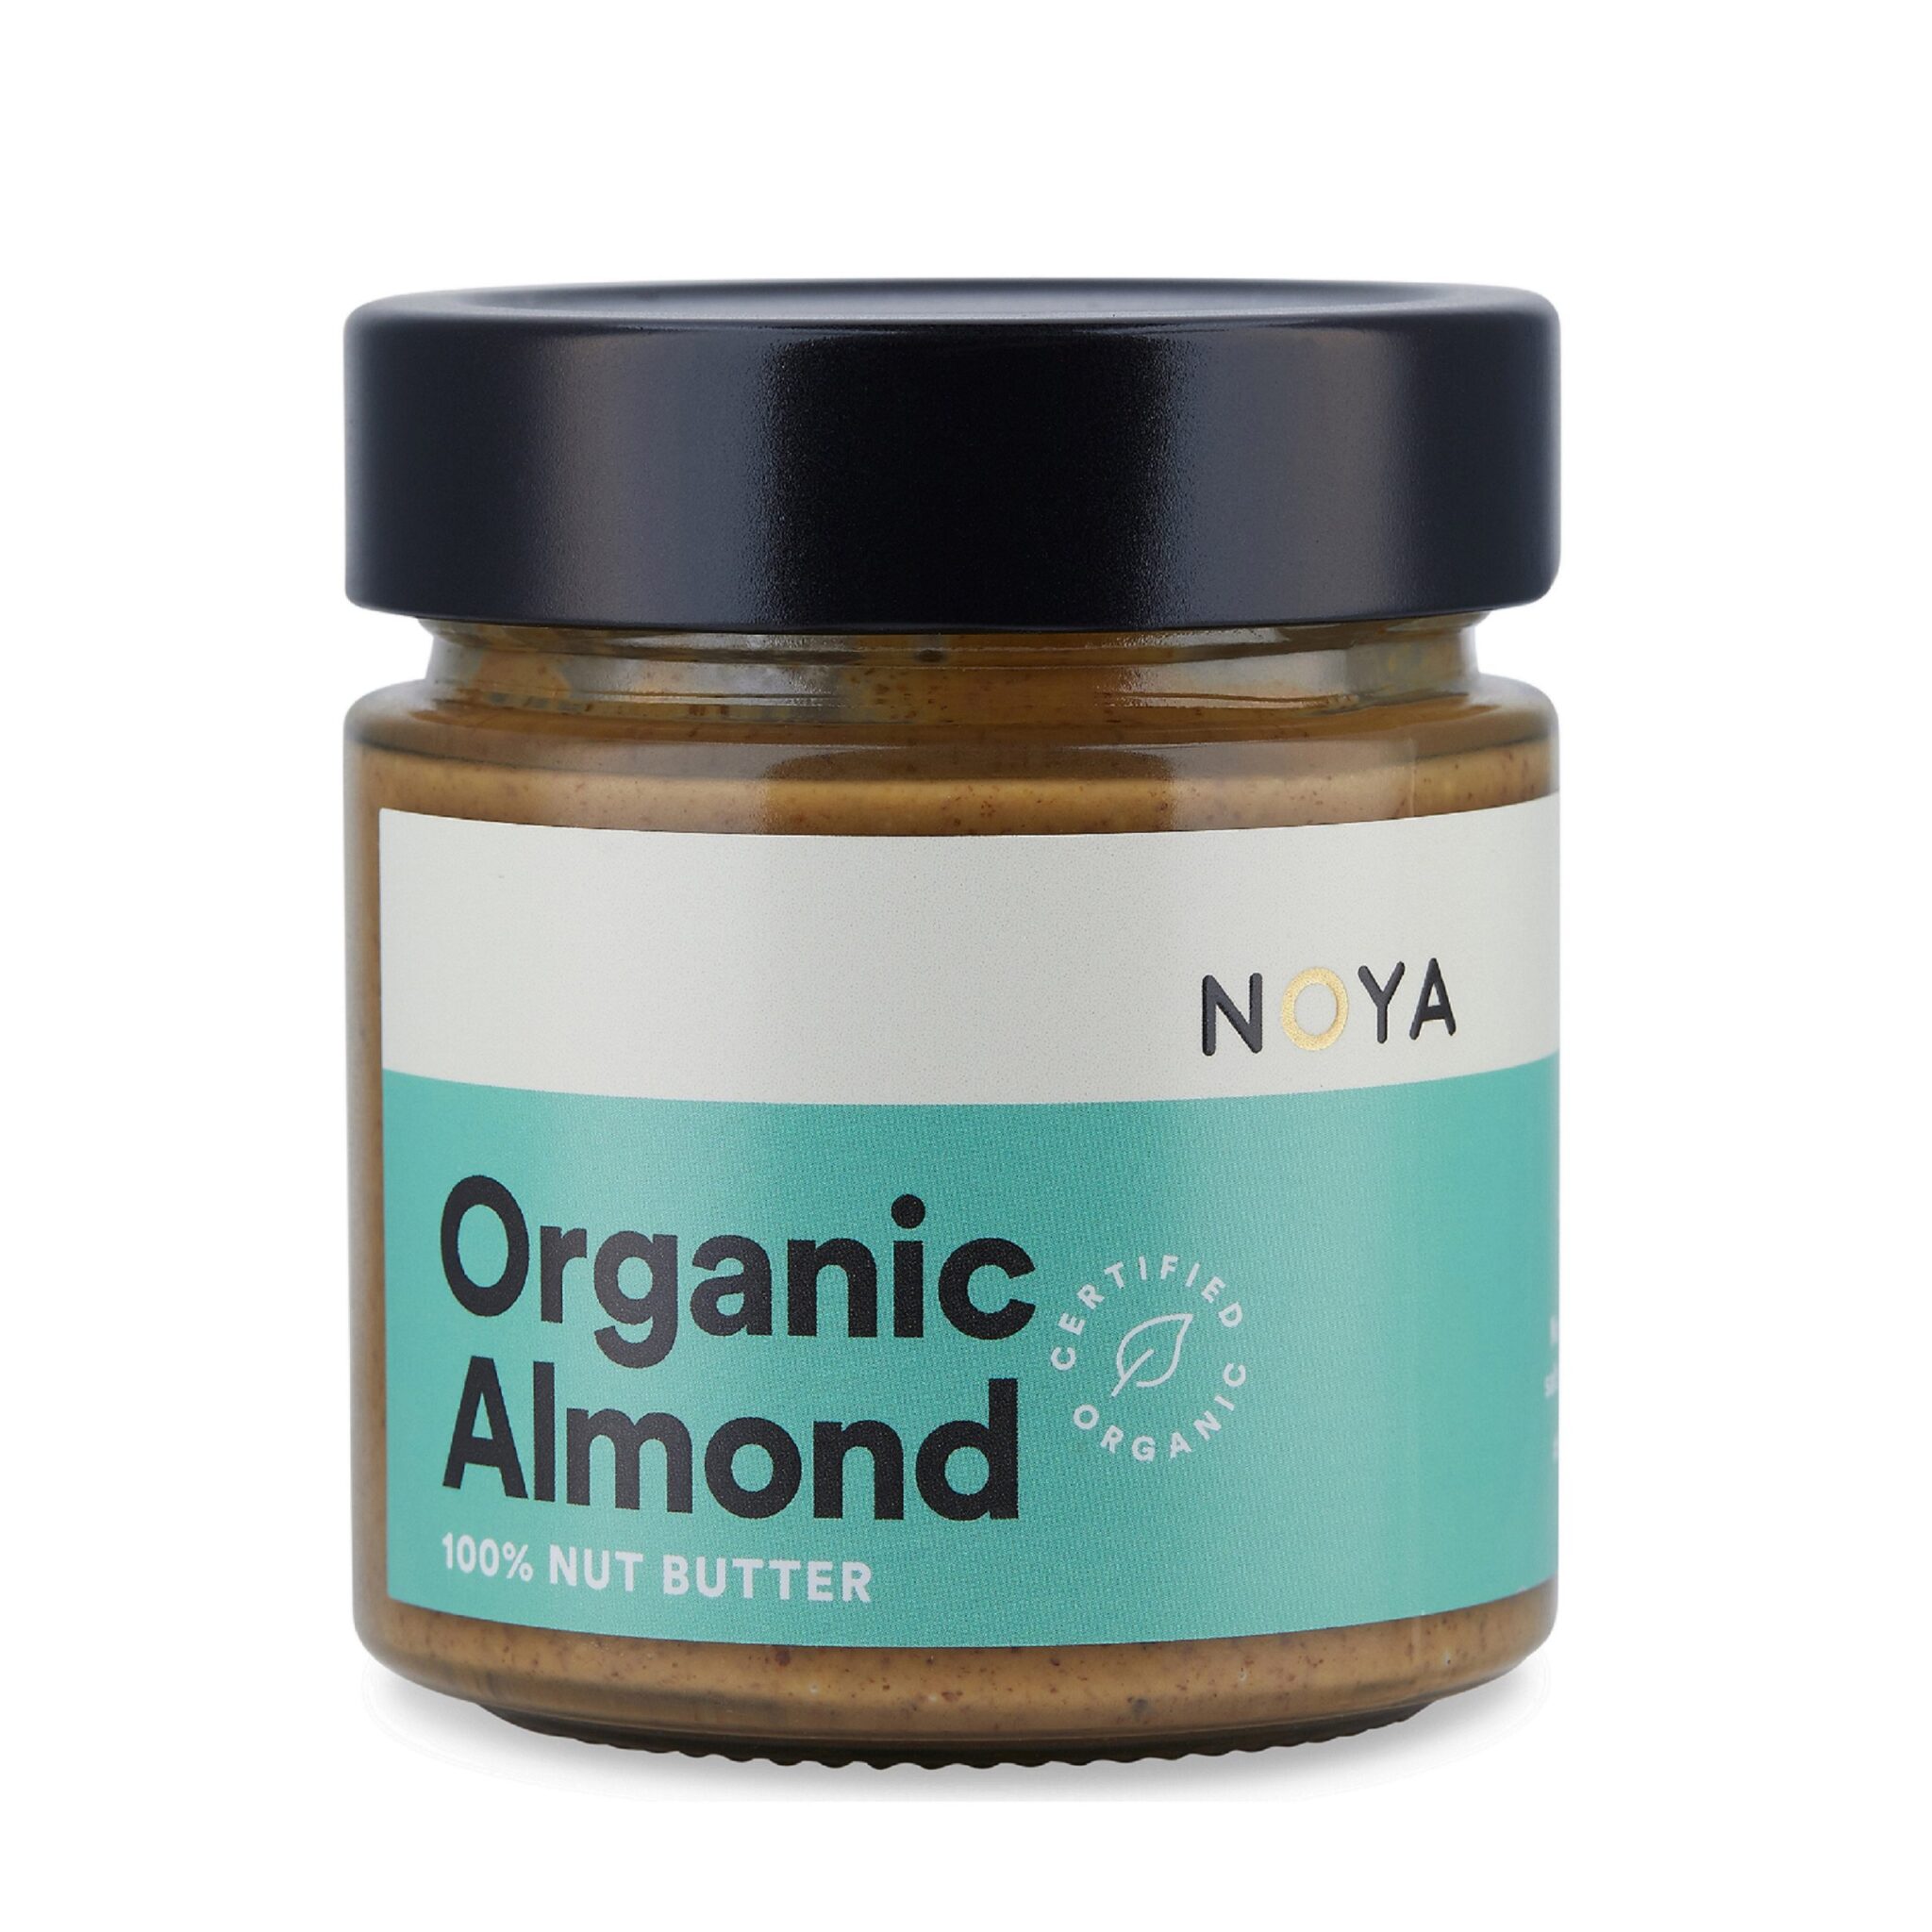 Organic Almond NOYA Nut Butter